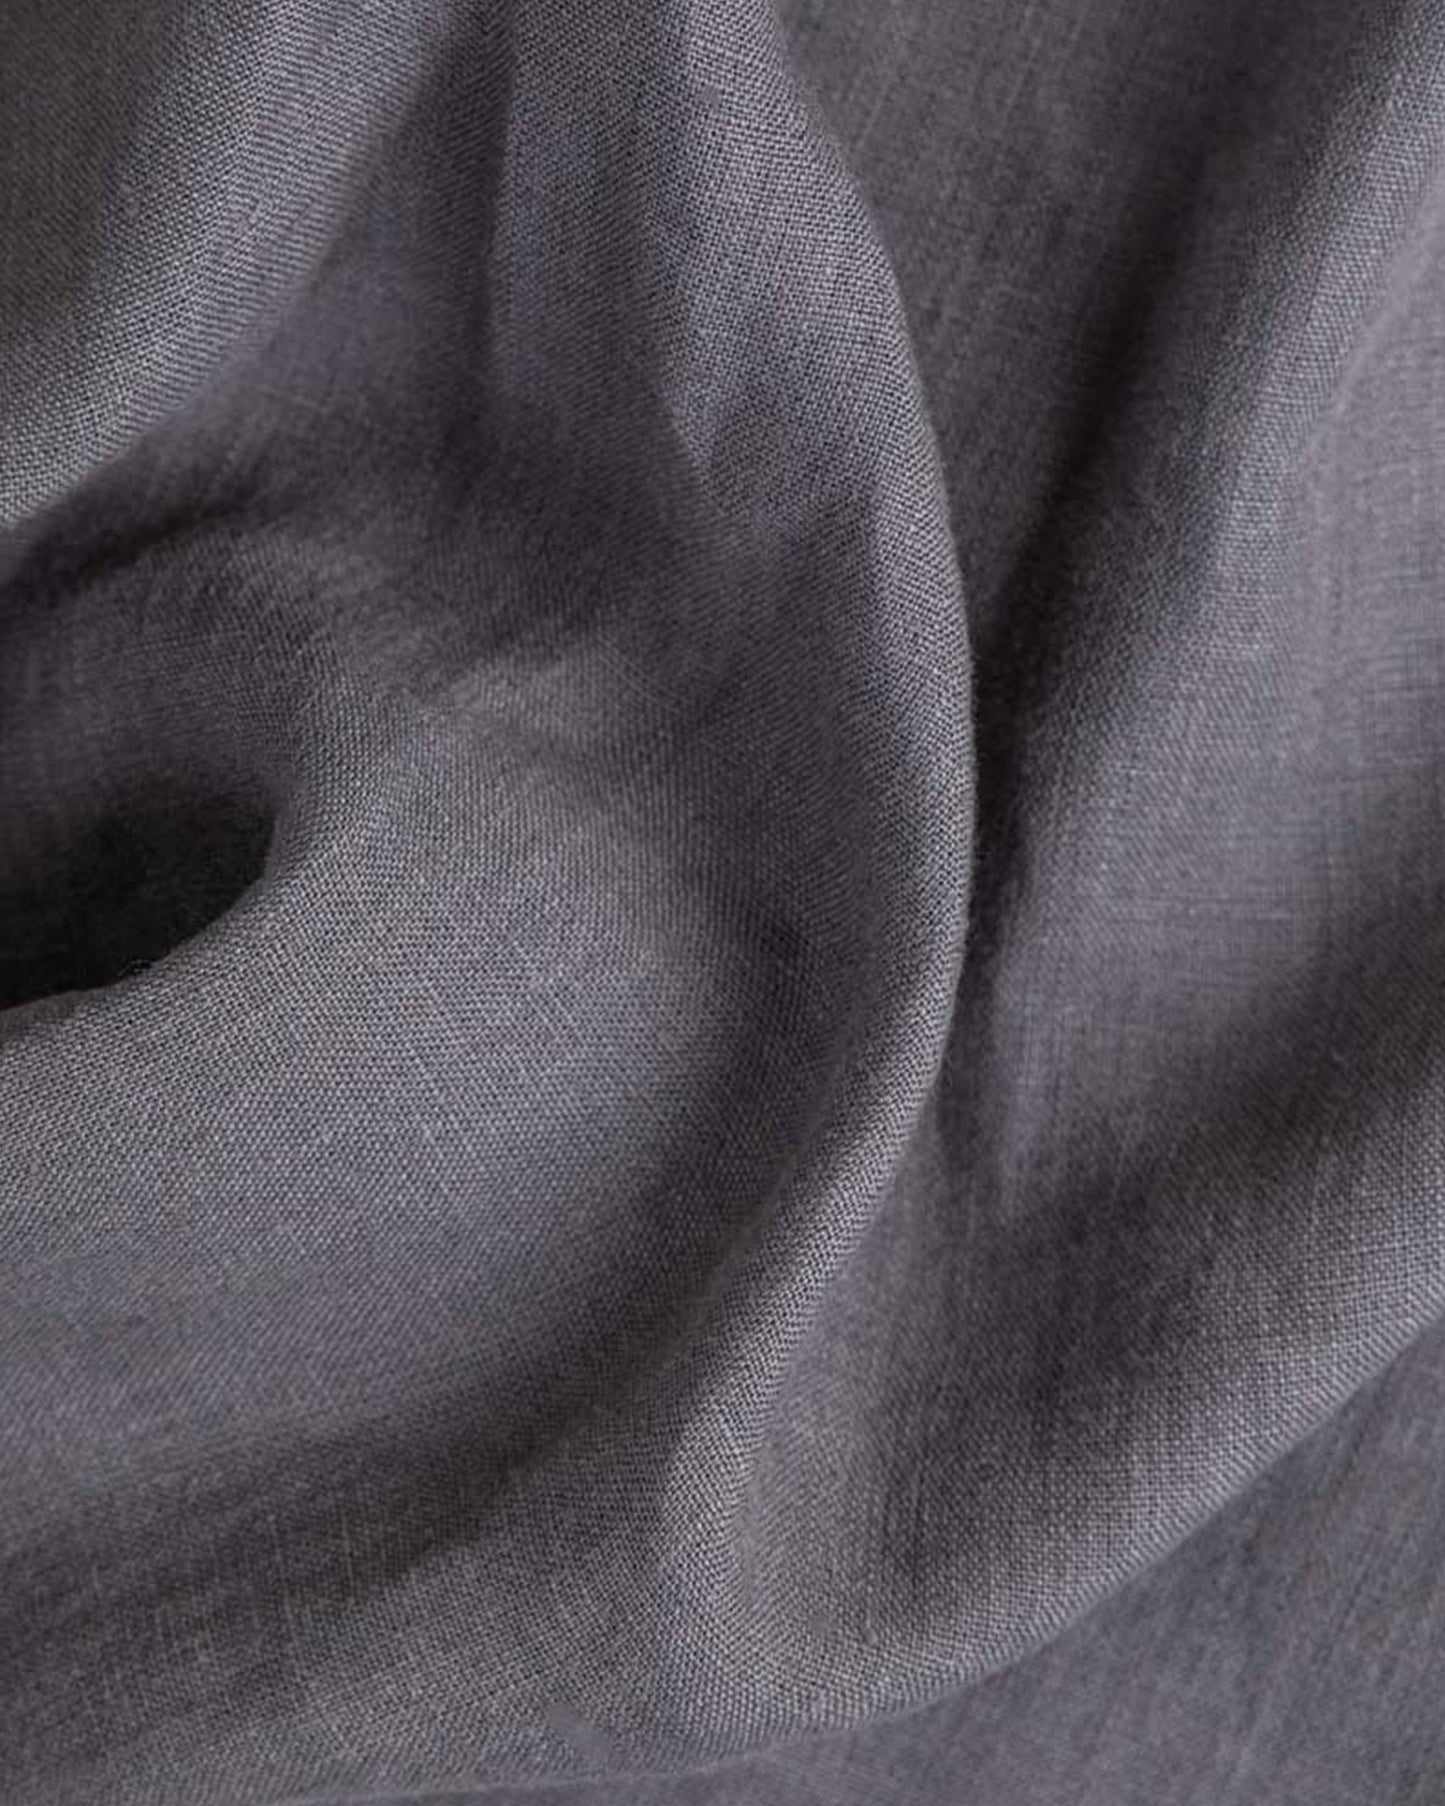 Charcoal gray linen napkin set of 2 - MagicLinen